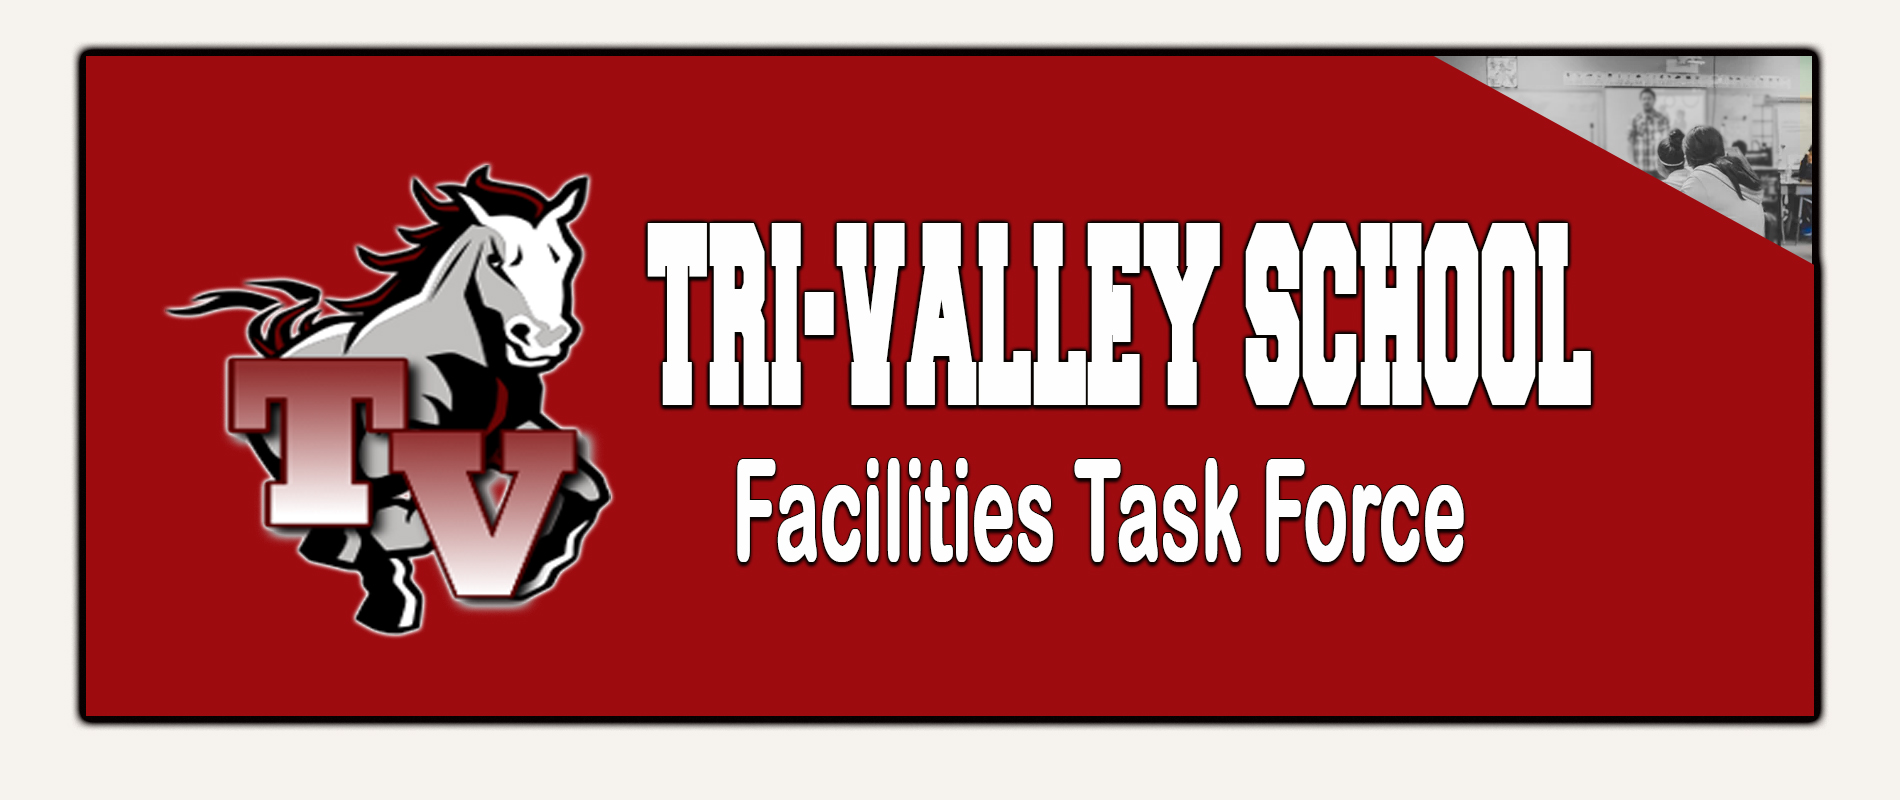 facilities task force logo